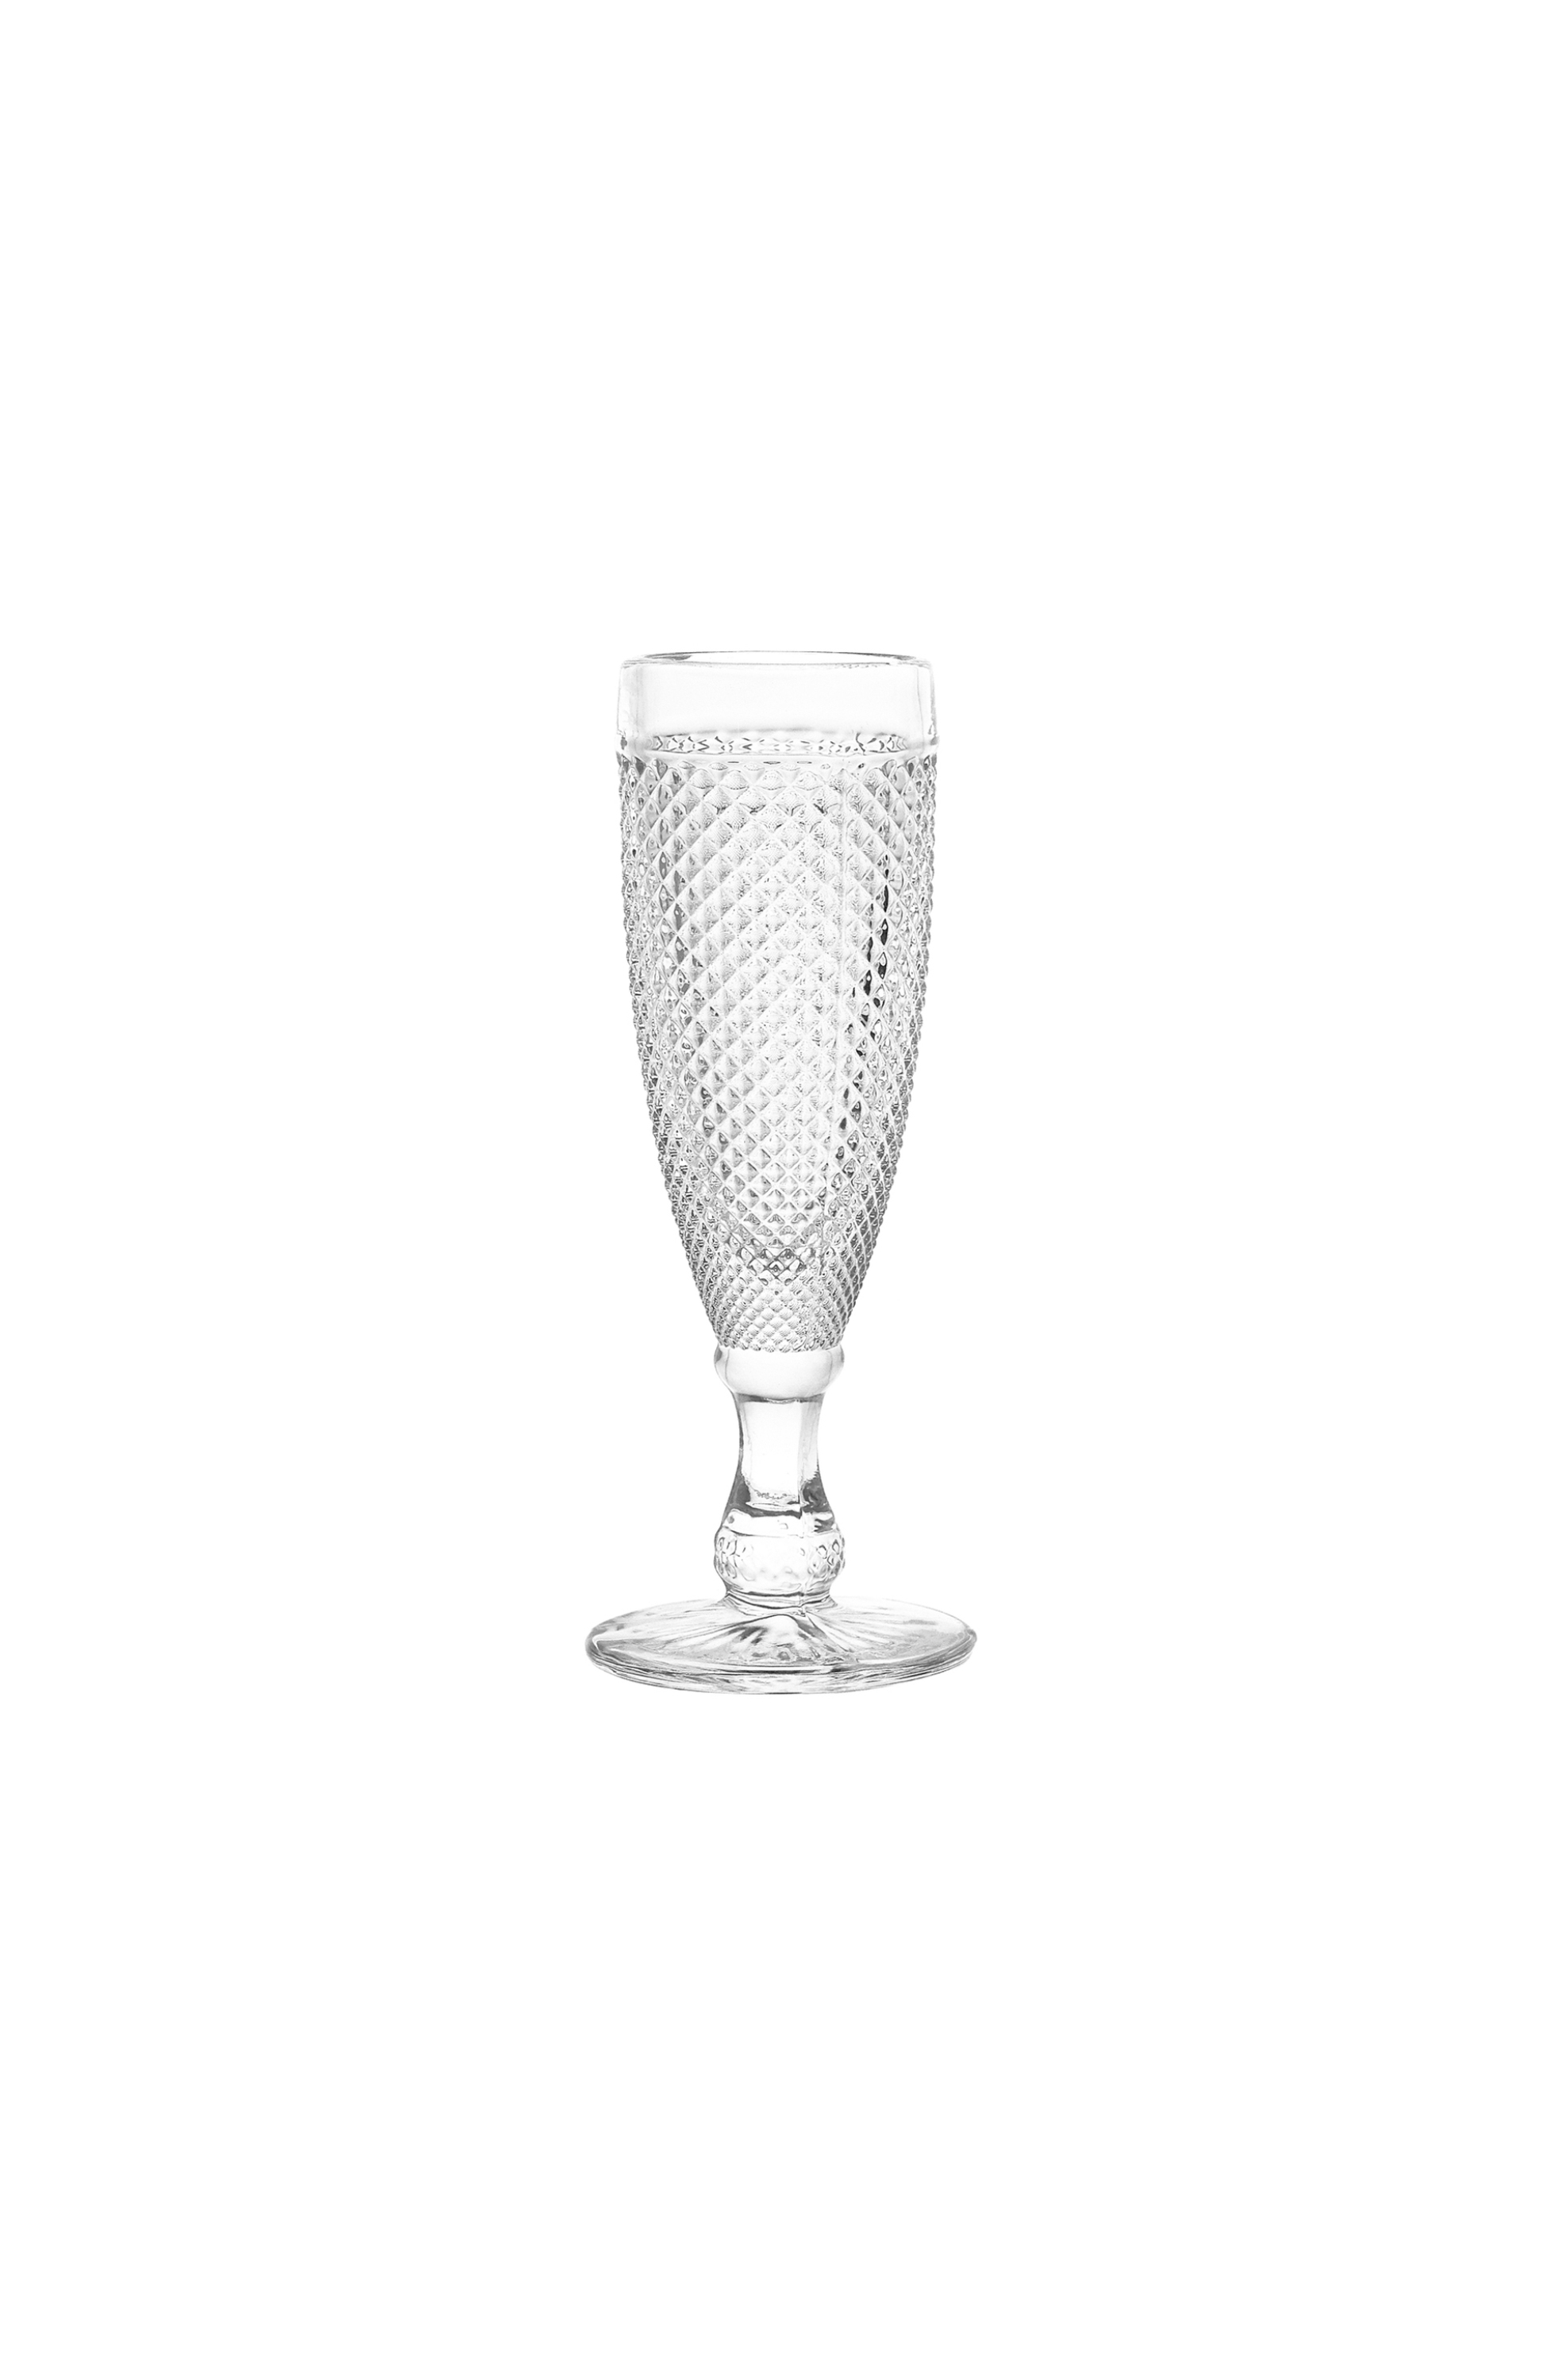 Home > ΚΟΥΖΙΝΑ > Υαλικά > Ποτήρια Coincasa κολωνάτo γυάλινo ποτήρι Diamond-cut effect 18 cm - 007447390 Διάφανο